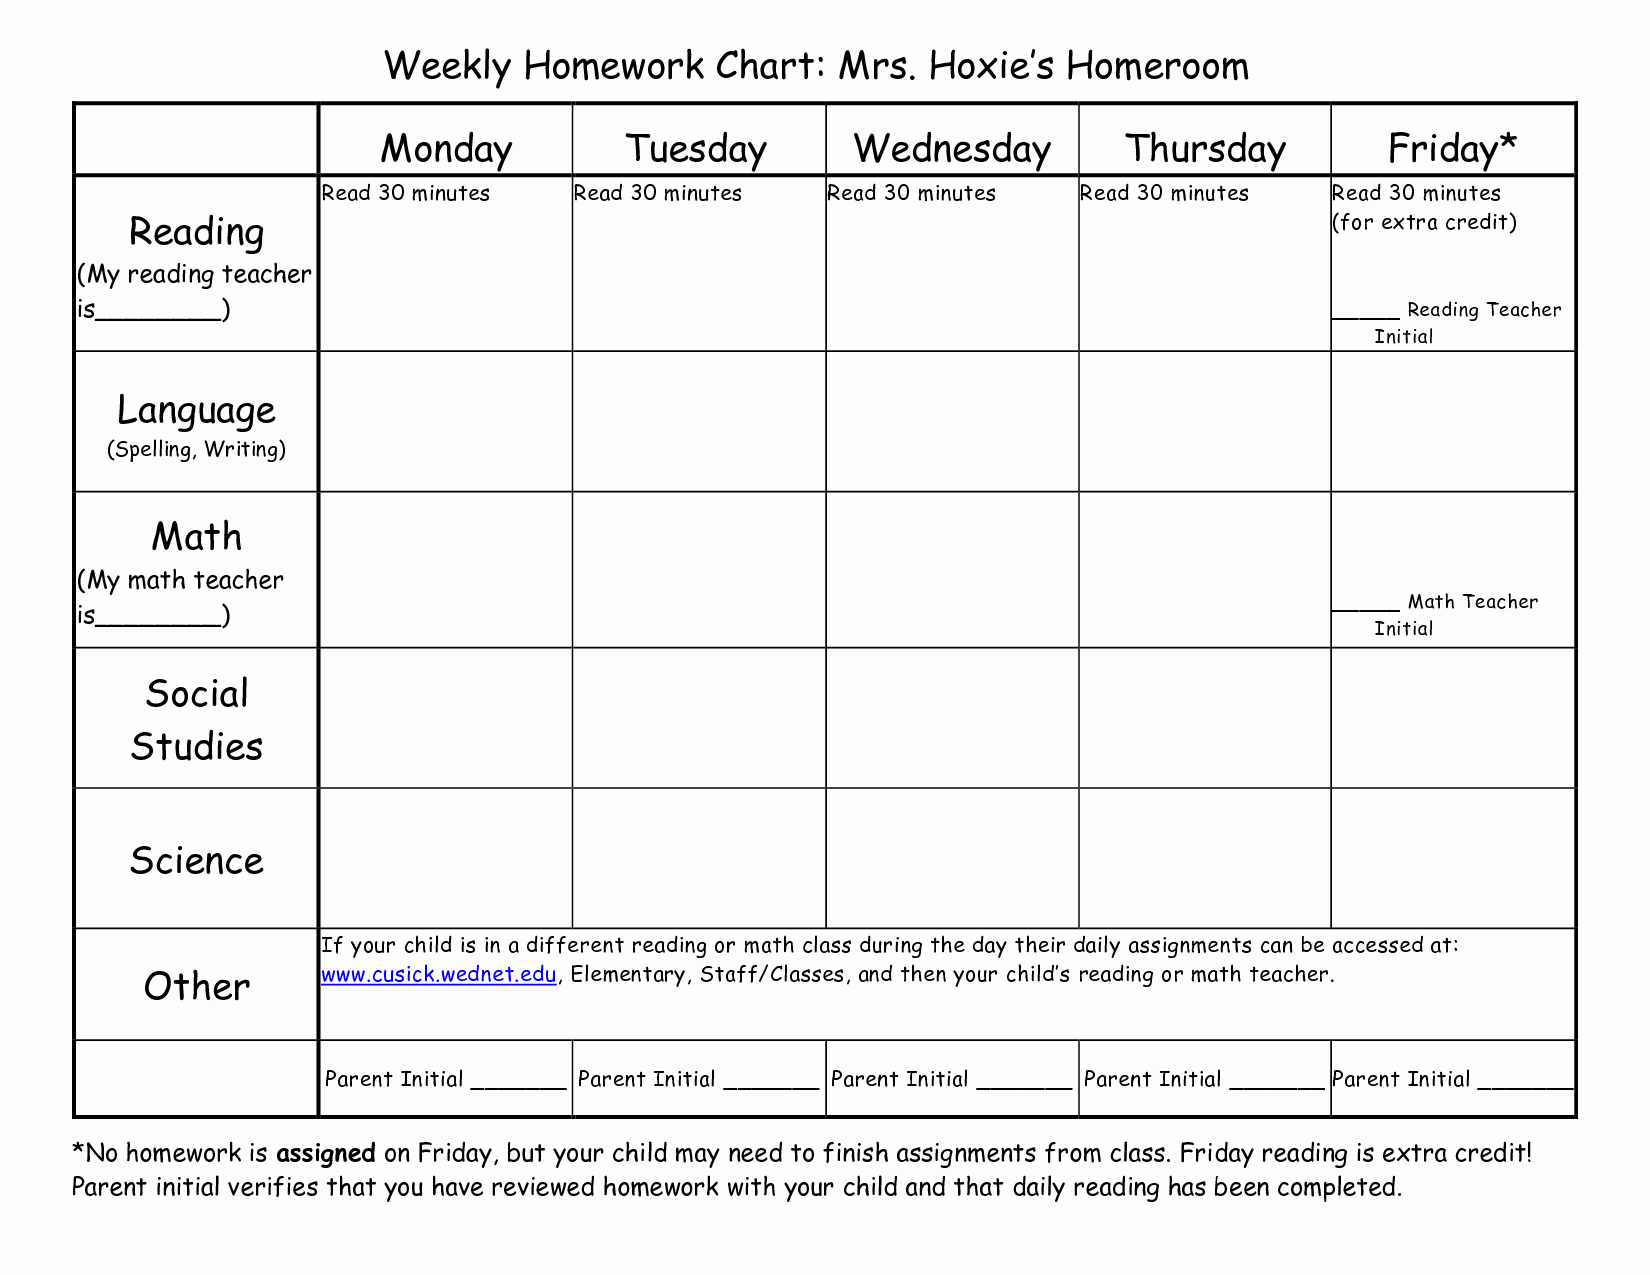 Weekly Homework assignment Sheet Template Fresh 16 Homework Templates Excel Pdf formats